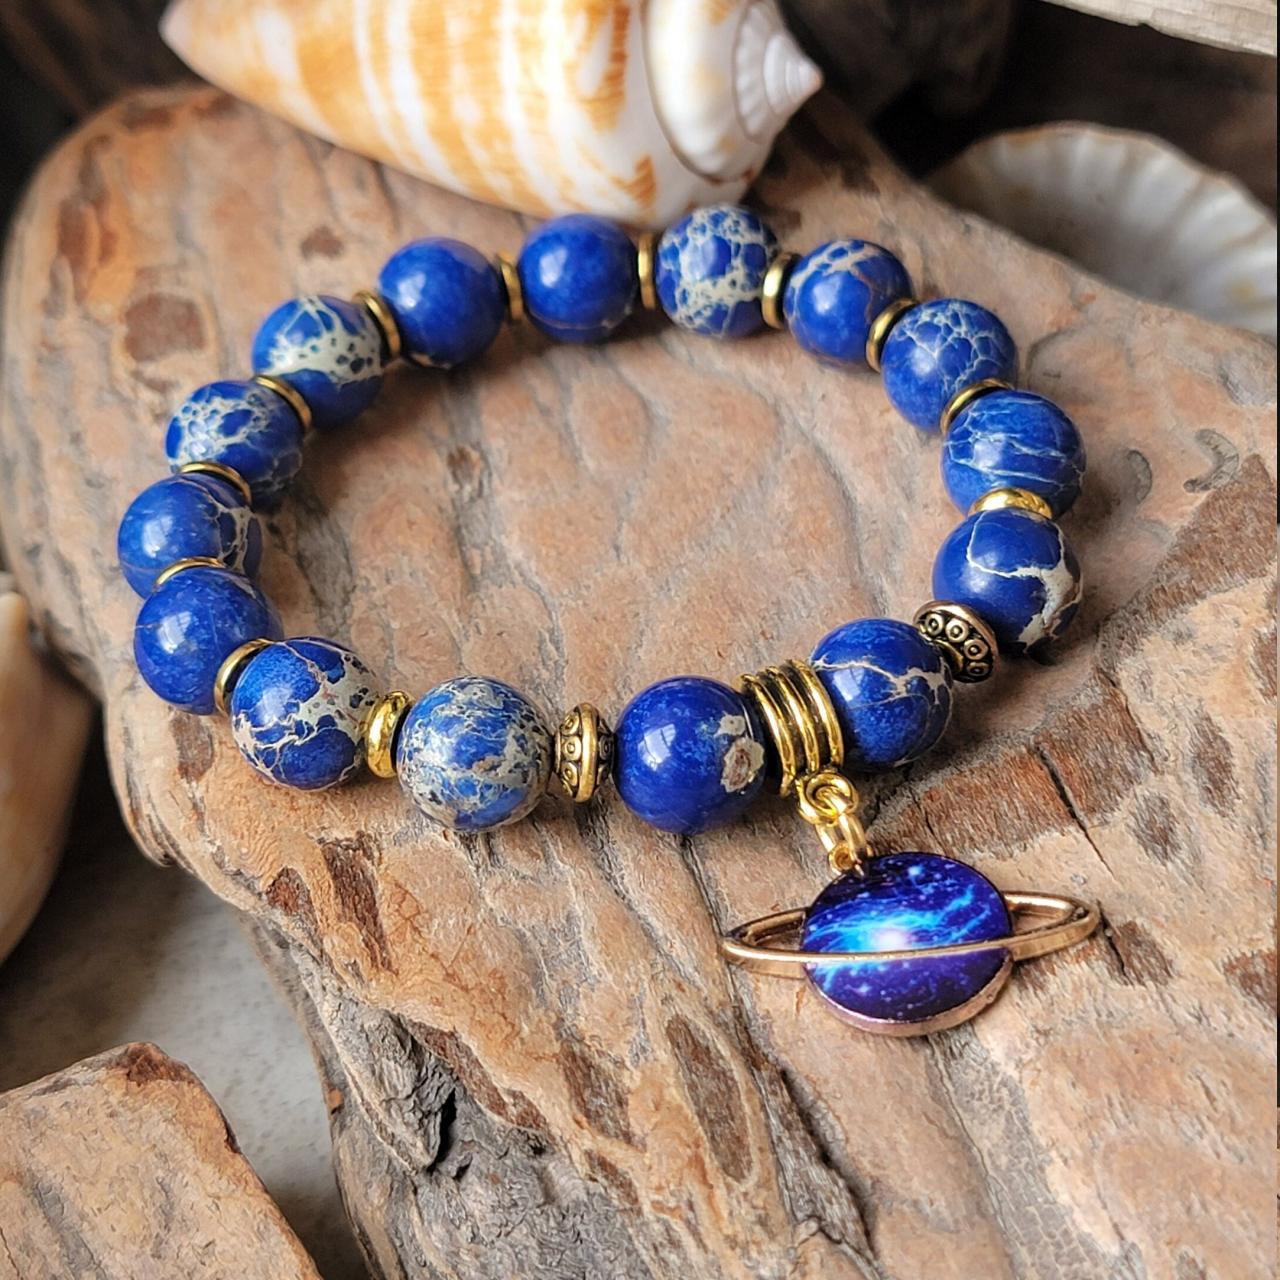 Blue Sea Sediment Jasper Natural Healing Gemstone Bracelet With Planet Charm